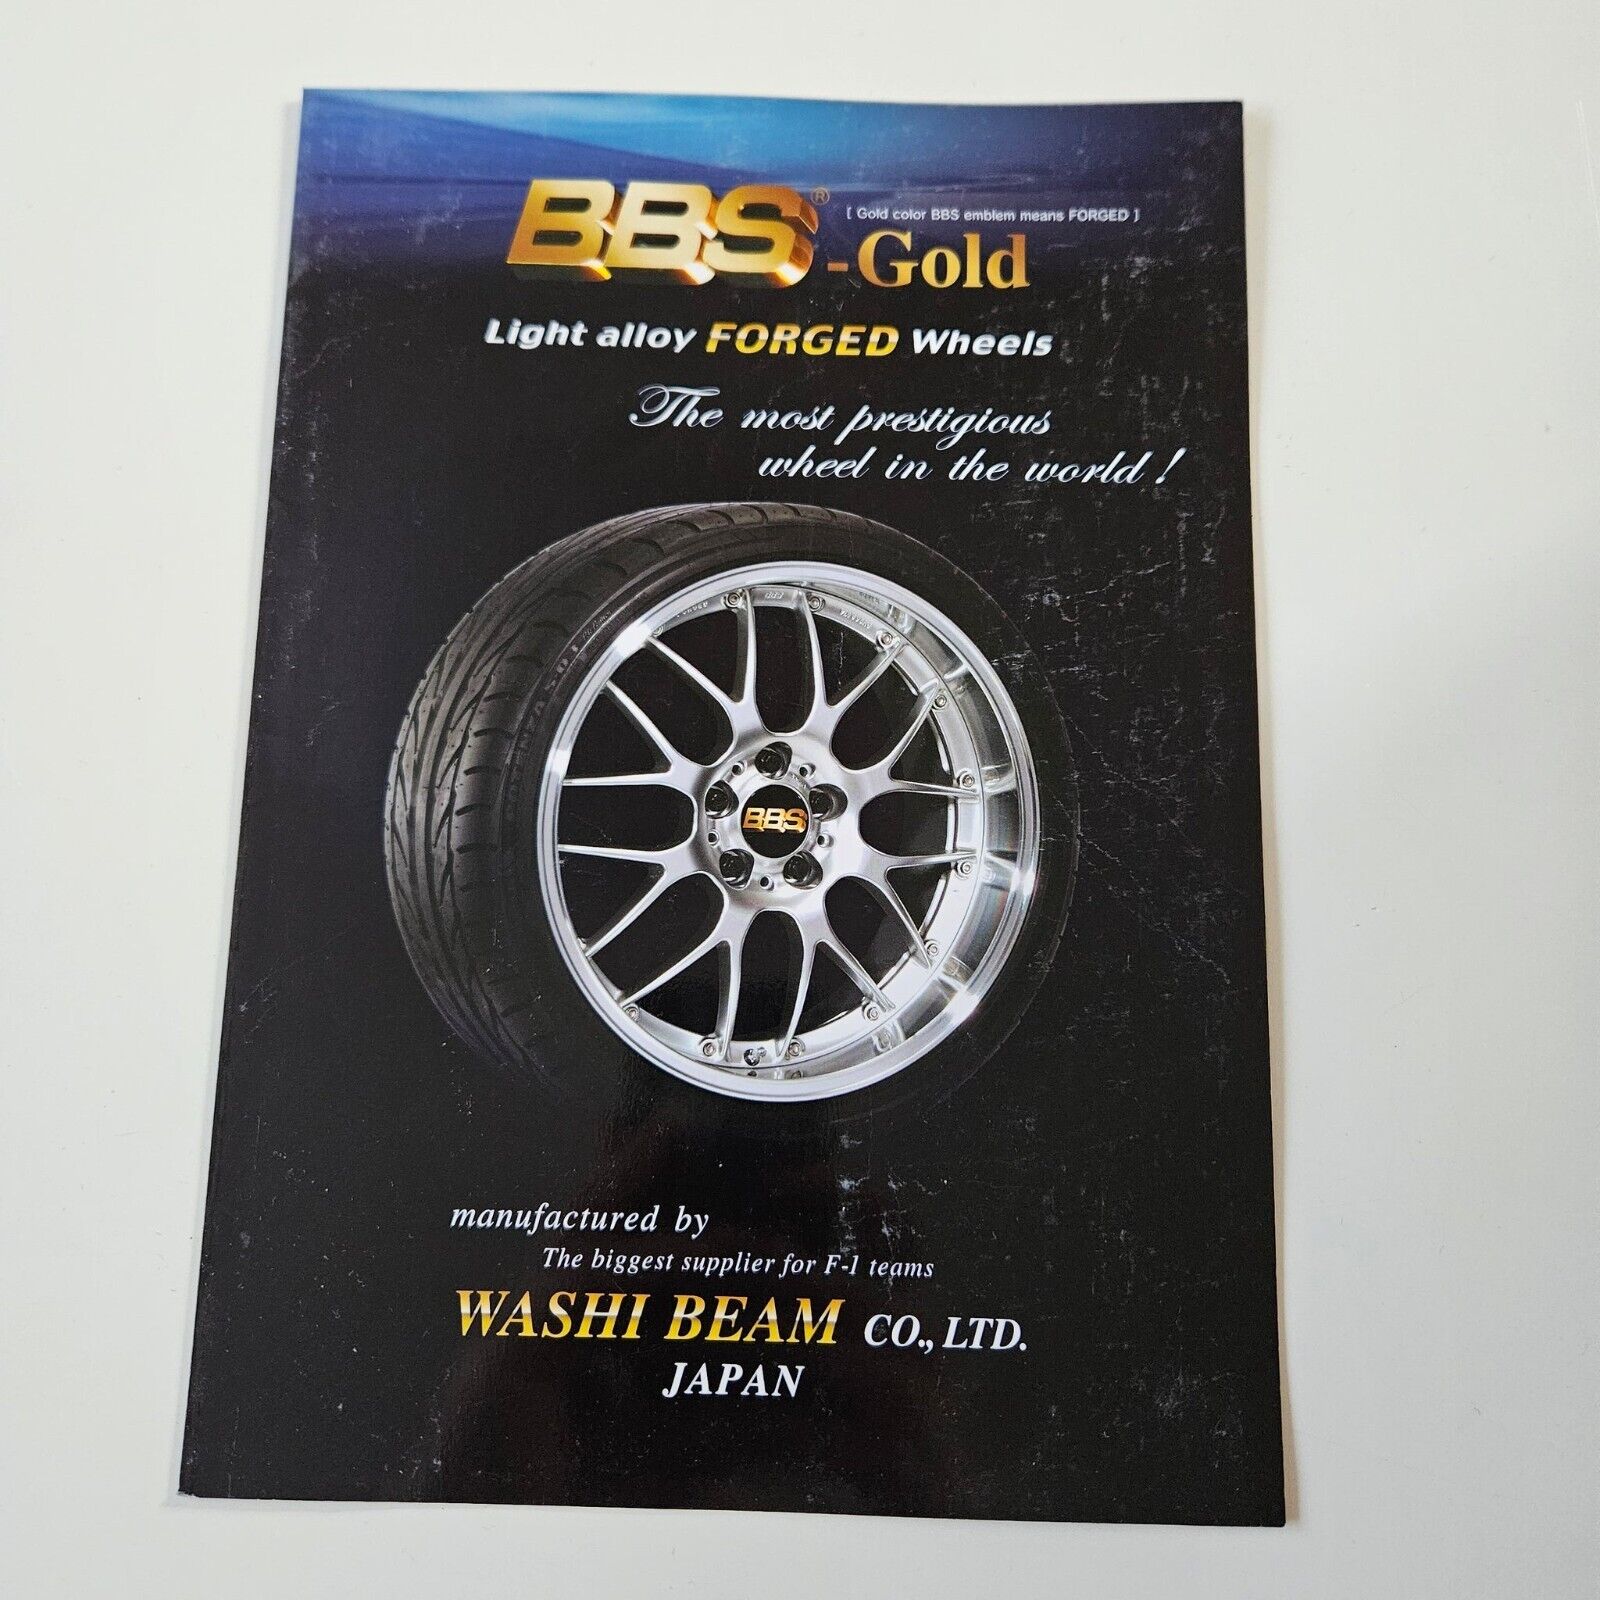 ✅ BBS Motorsport Gold Light Alloy Forged Wheels Brochure BMW AUDI ✅